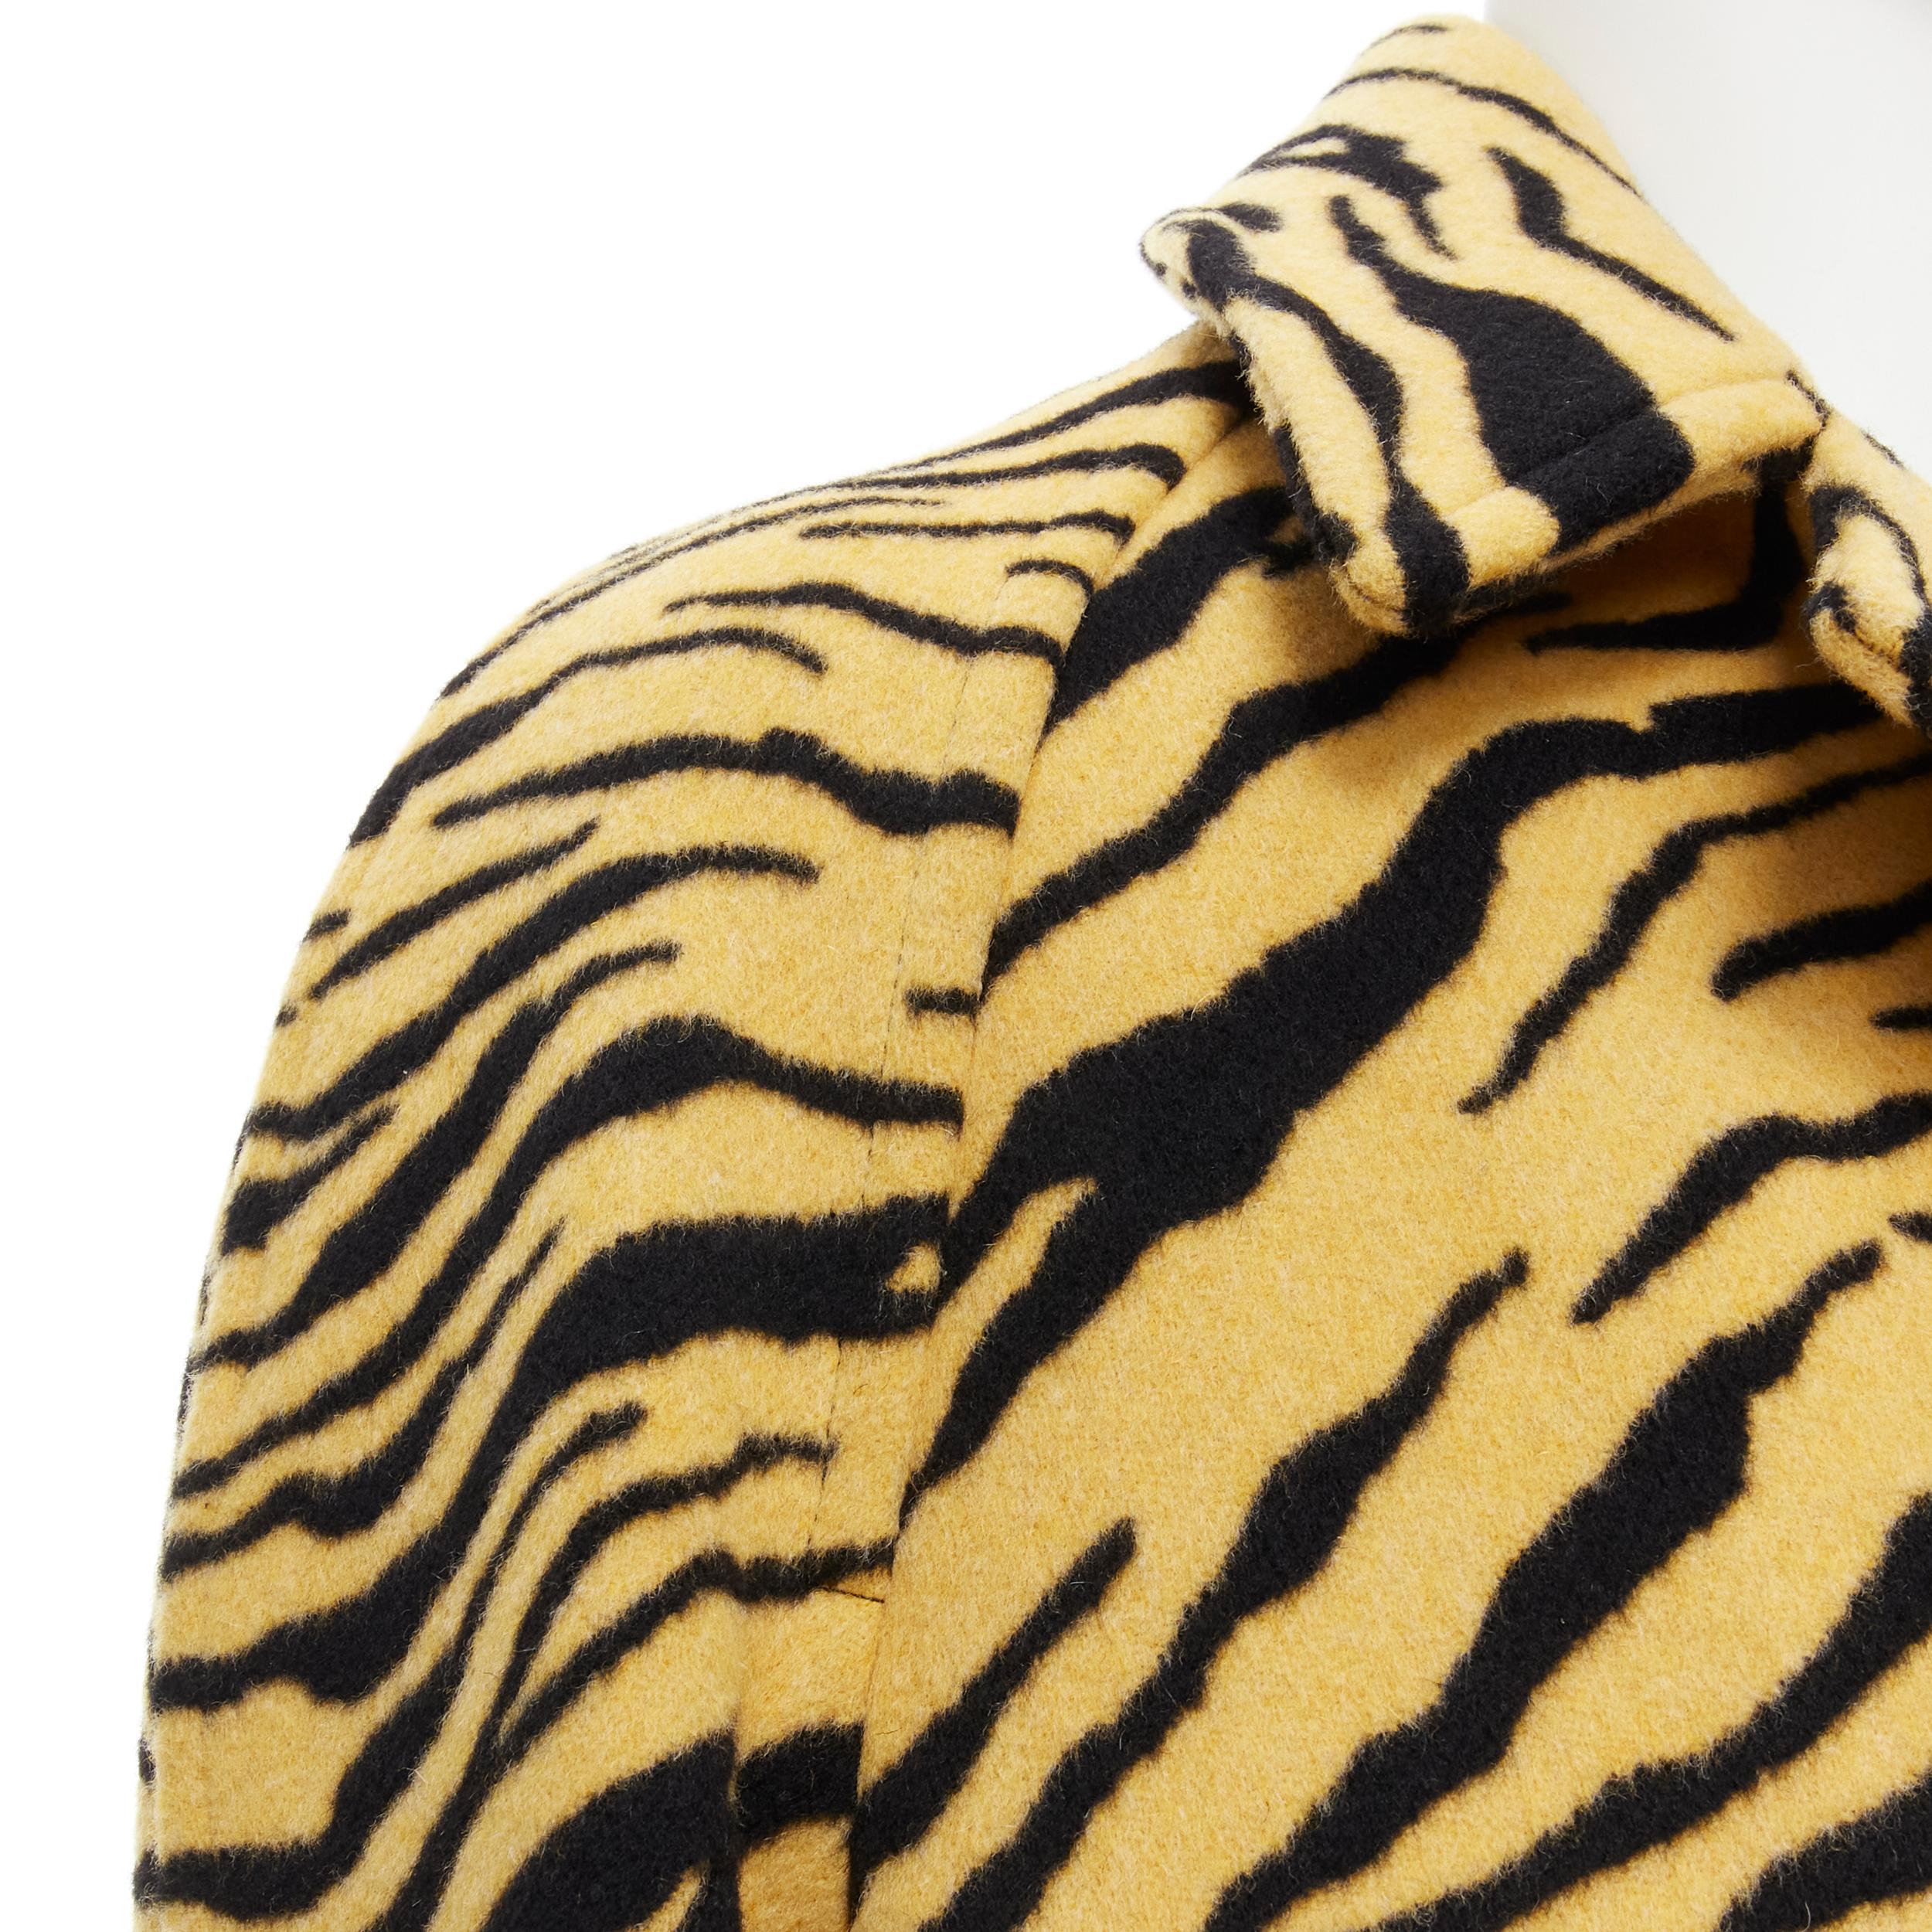 new CELINE Hedi Slimane 2019 Runway wool felt yellow black tiger coat EU48 M 1